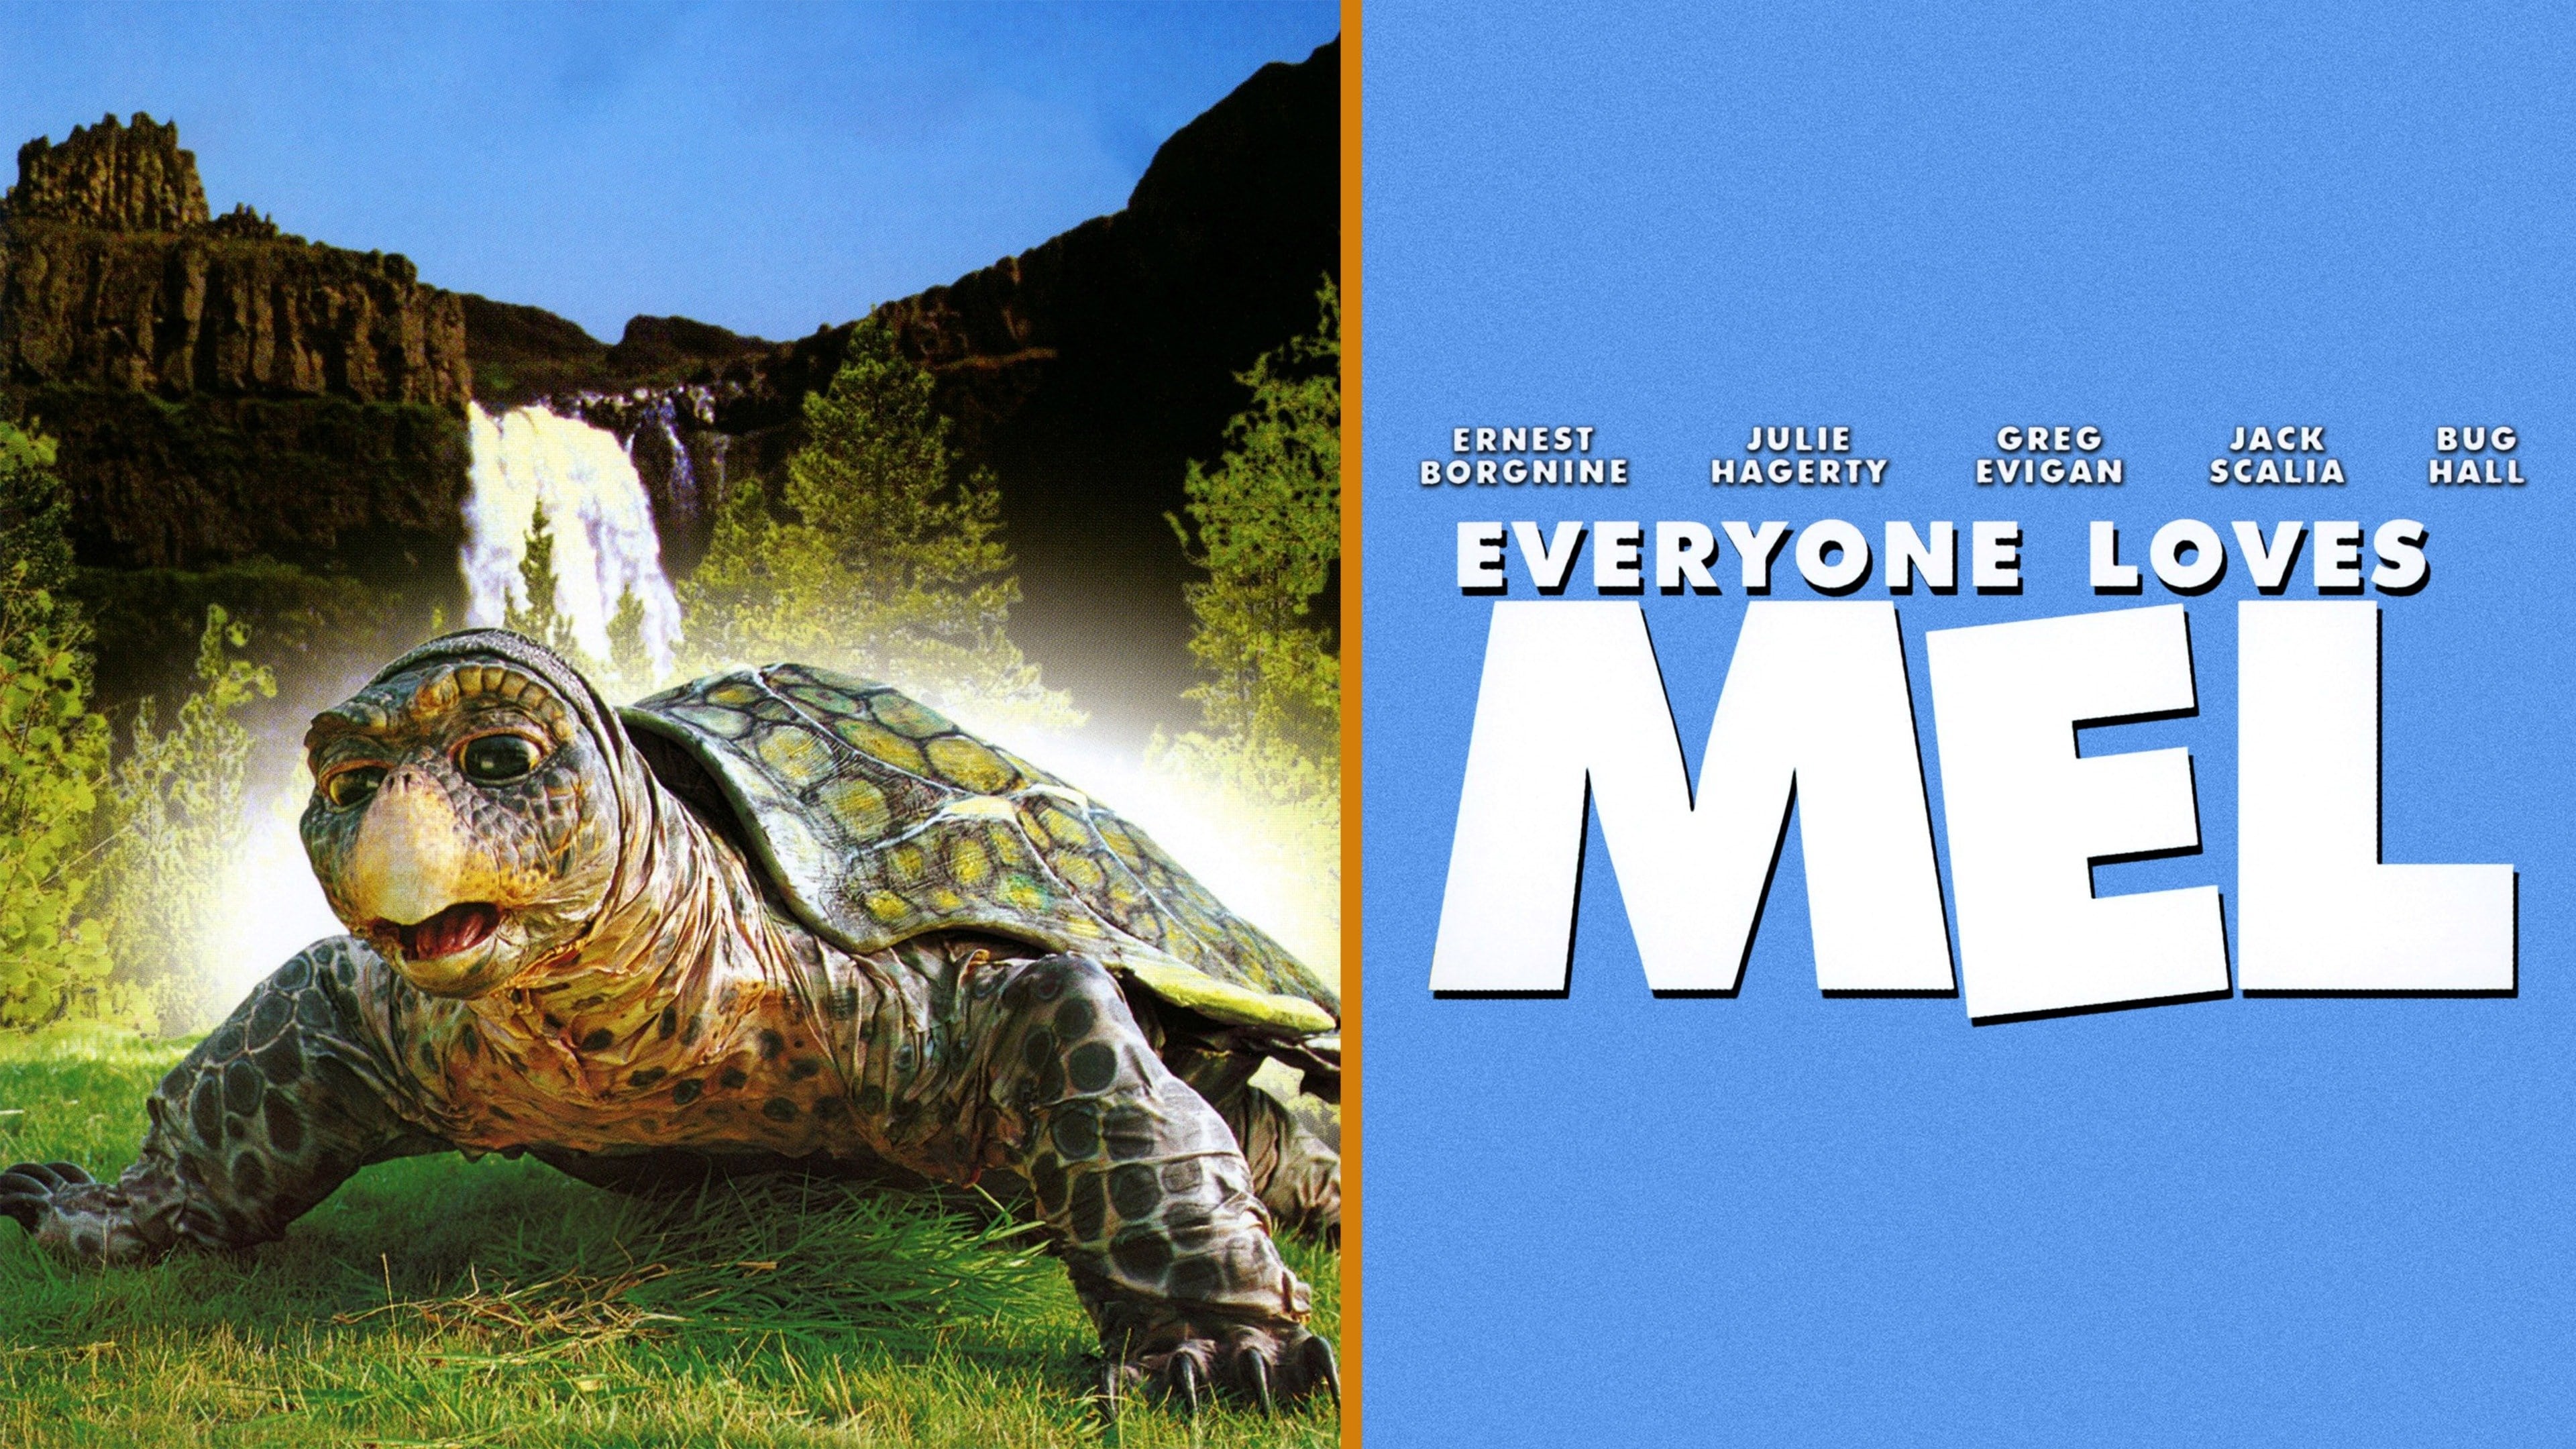 Mel - Una tartaruga per amico